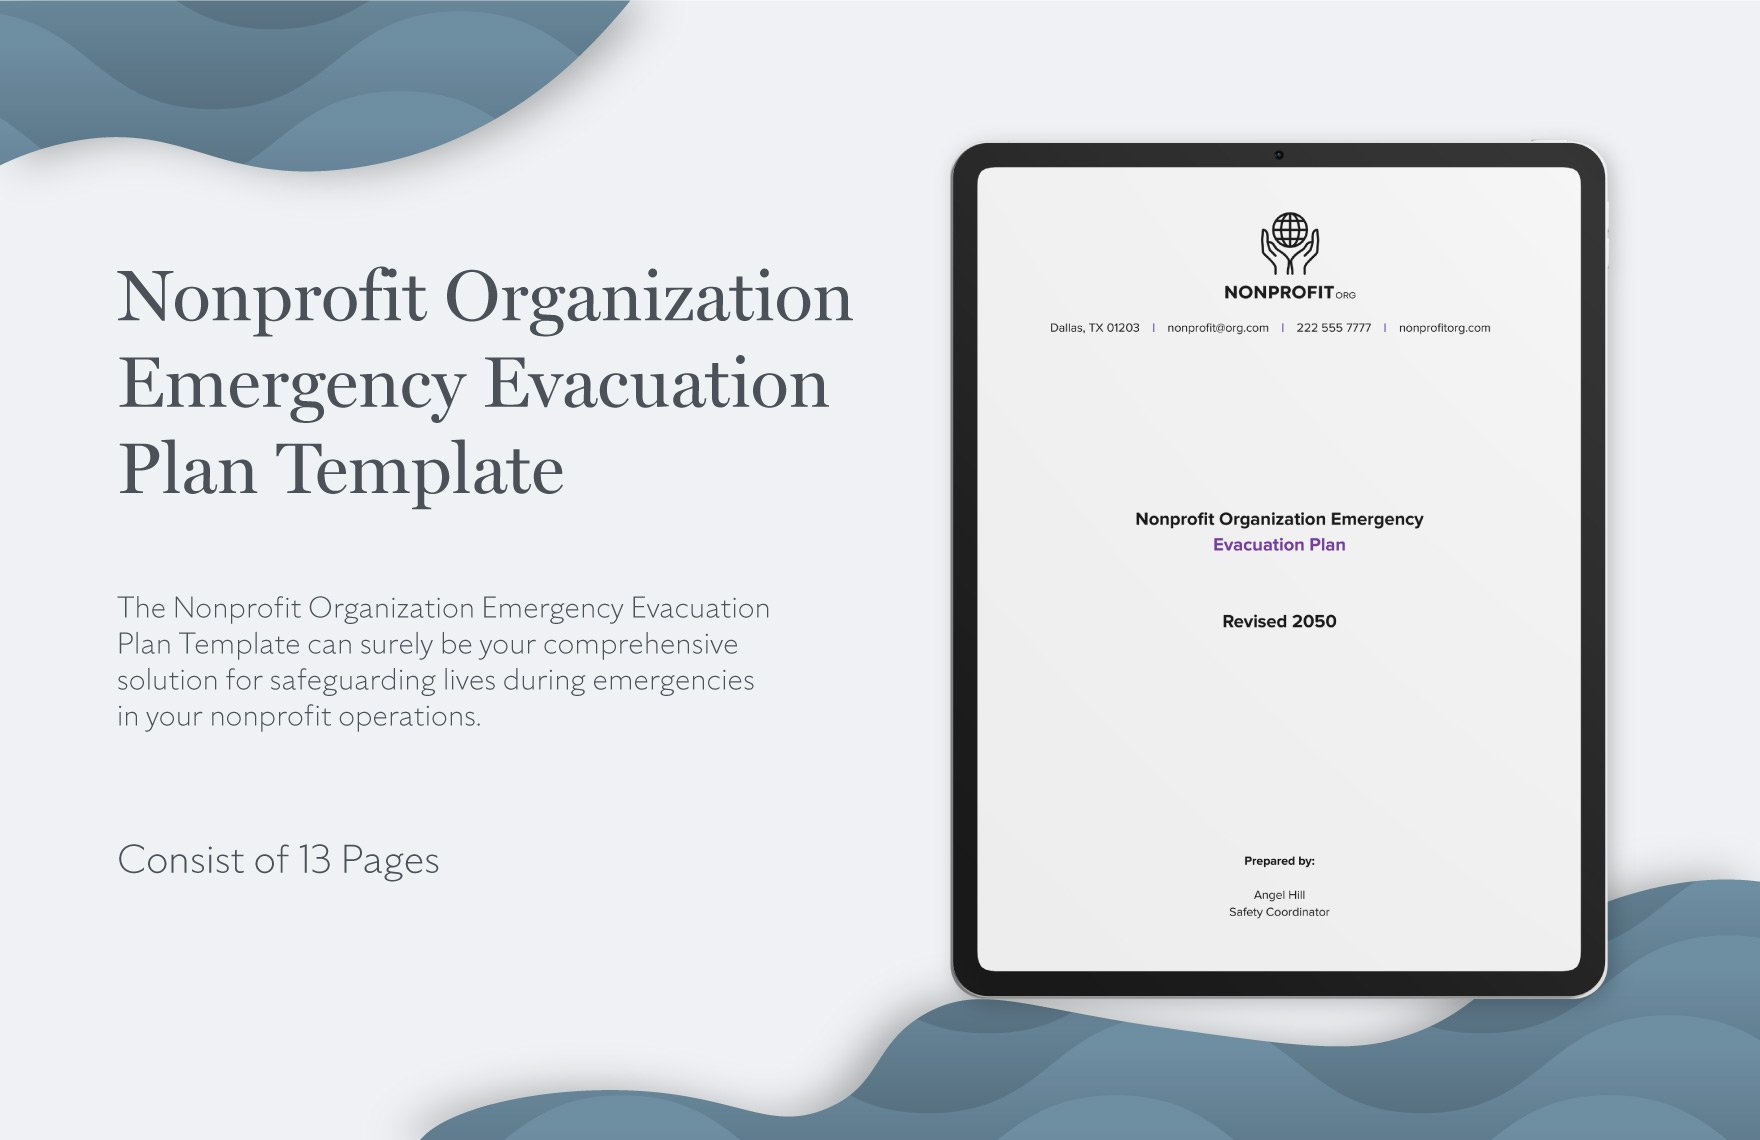 Nonprofit Organization Emergency Evacuation Plan Template